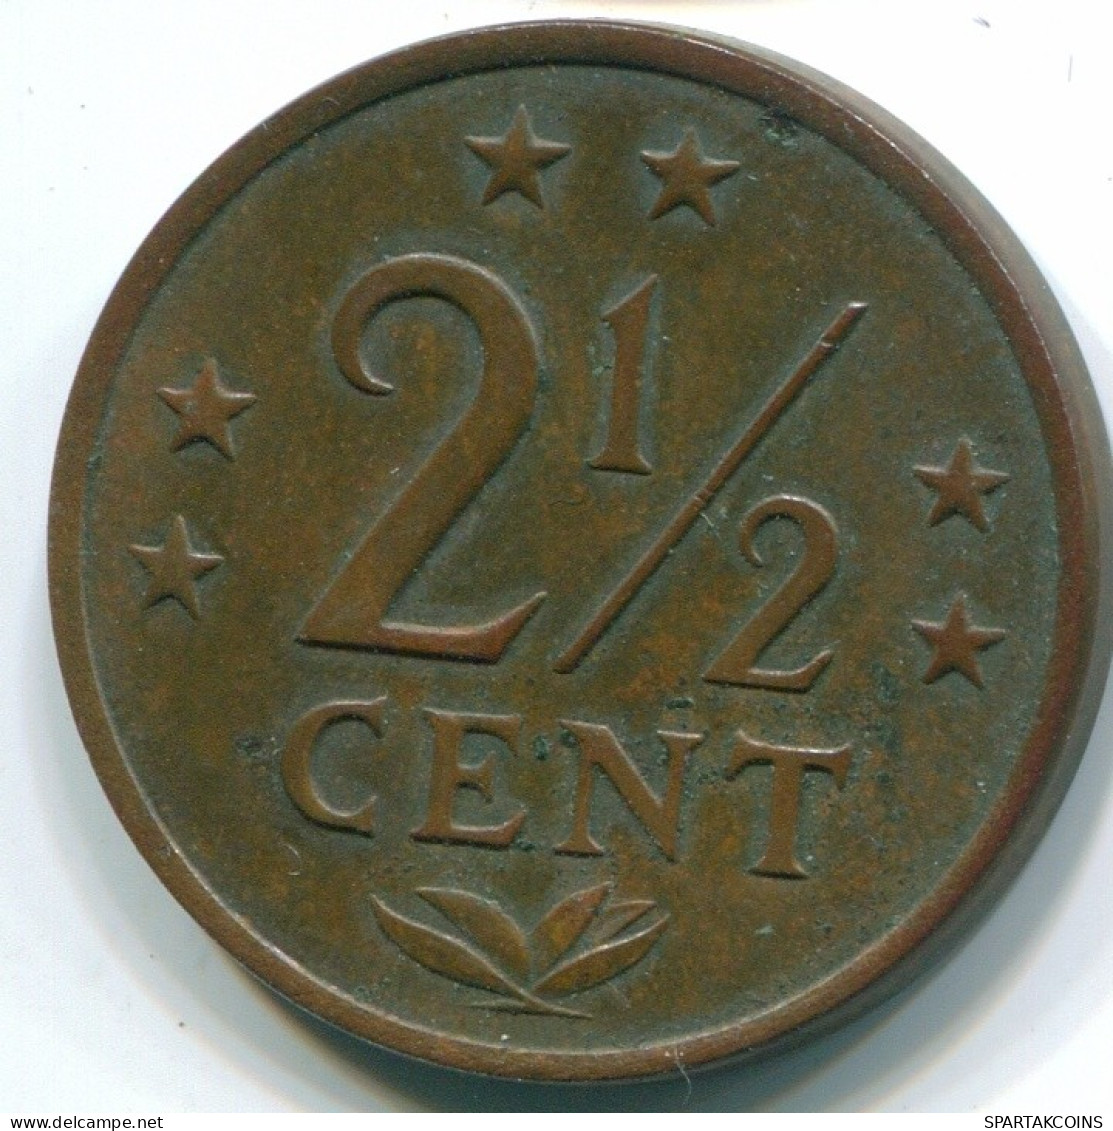 2 1/2 CENT 1971 NIEDERLÄNDISCHE ANTILLEN Bronze Koloniale Münze #S10492.D.A - Netherlands Antilles